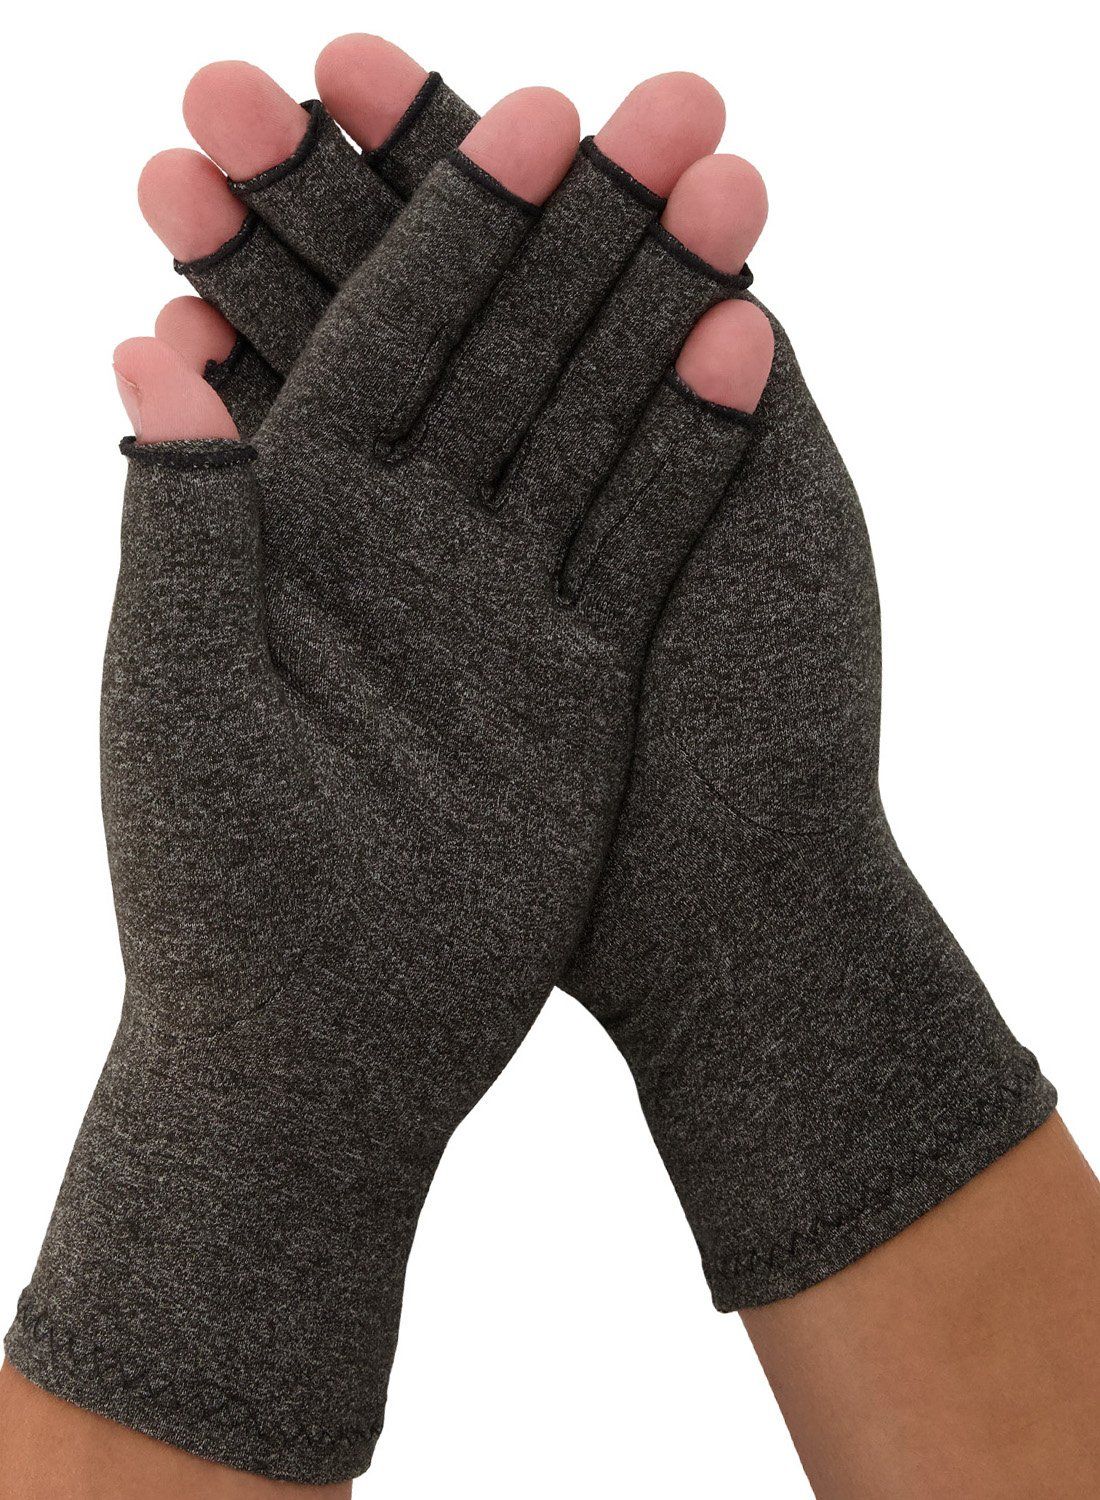 dunimed rheumatoid arthritis osteoarthritis gloves for sale